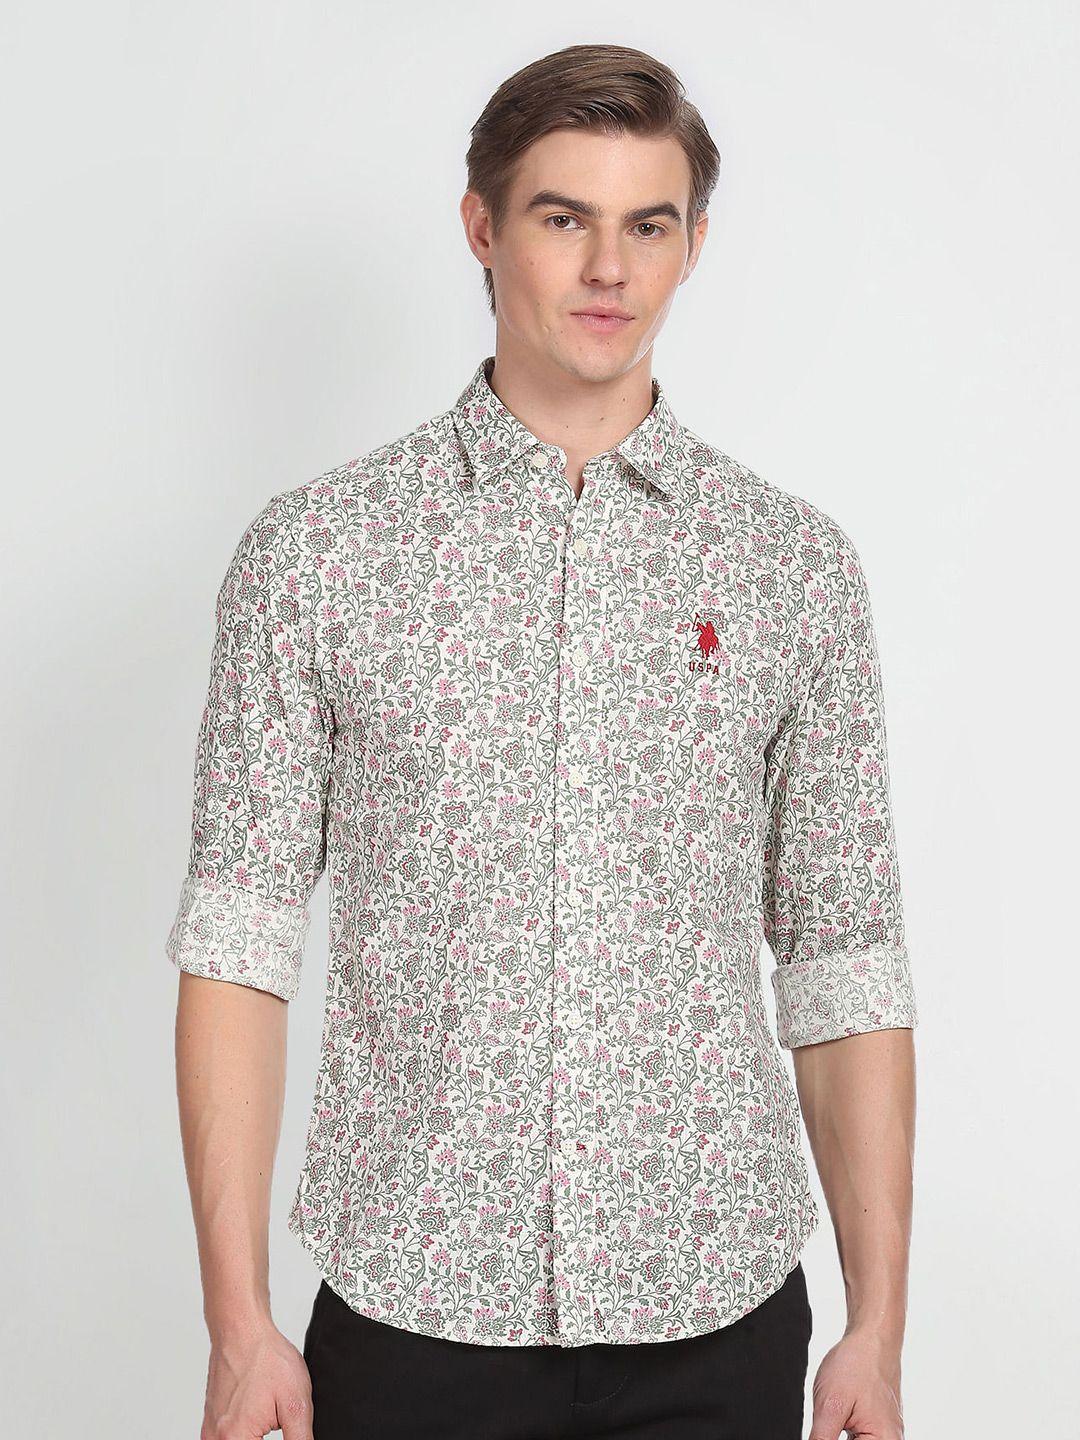 u.s. polo assn. denim co. floral printed slim fit comfort cotton casual shirt